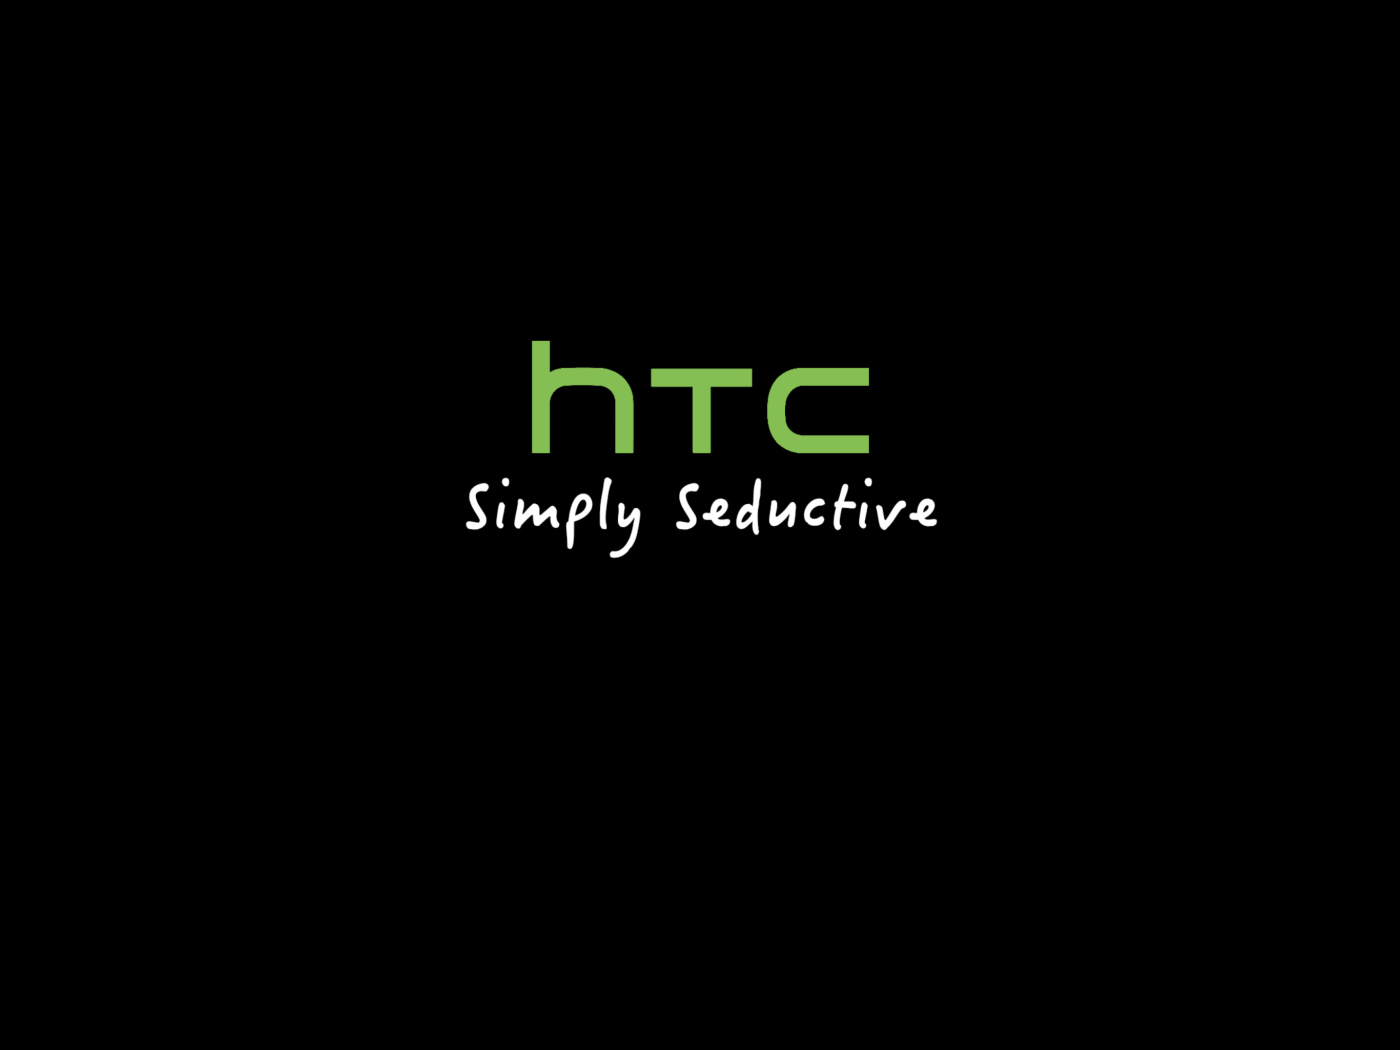 HTC - Simply Seductive wallpaper 1400x1050